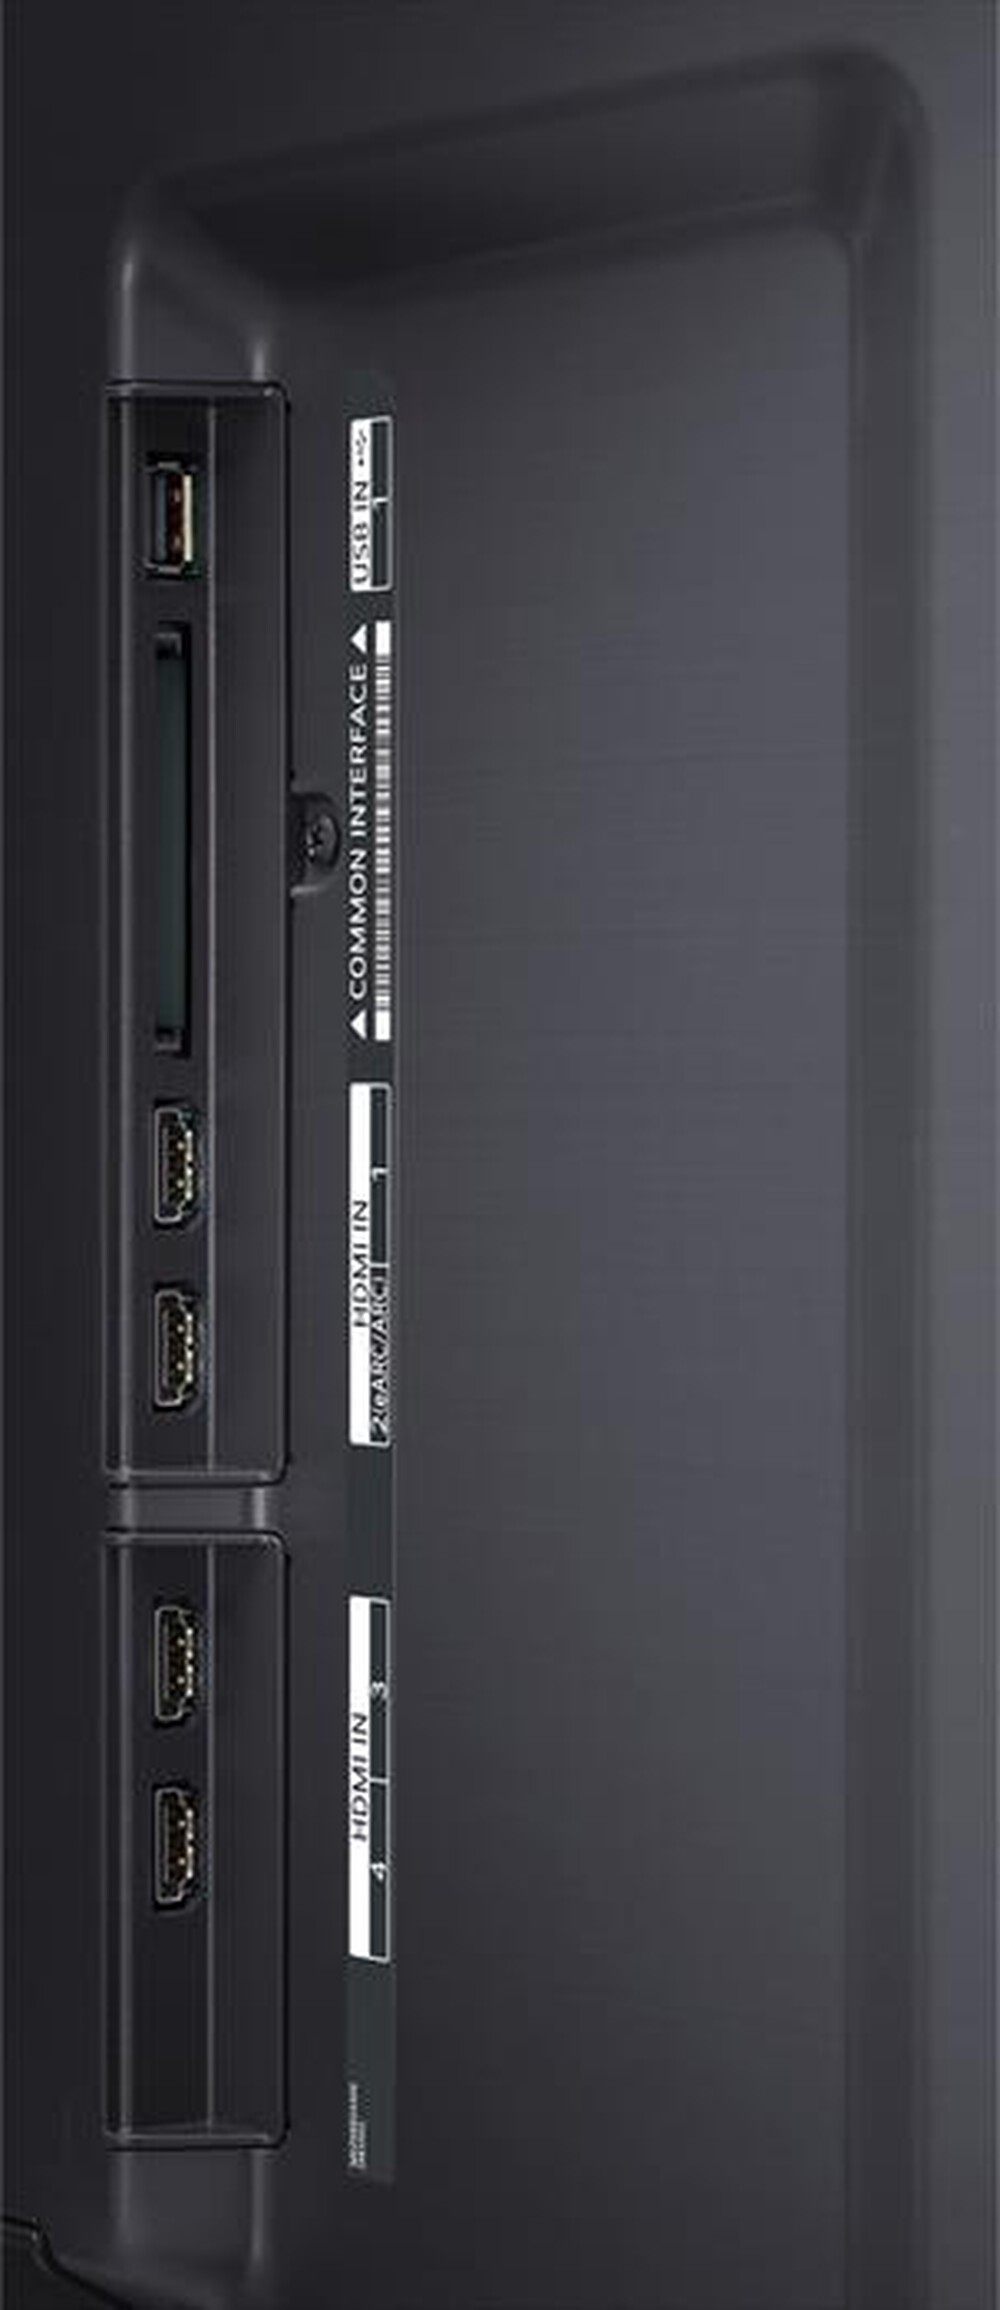 "LG - Smart TV NanoCell 4K 65\" 65NANO816PA-Meteor Gray"